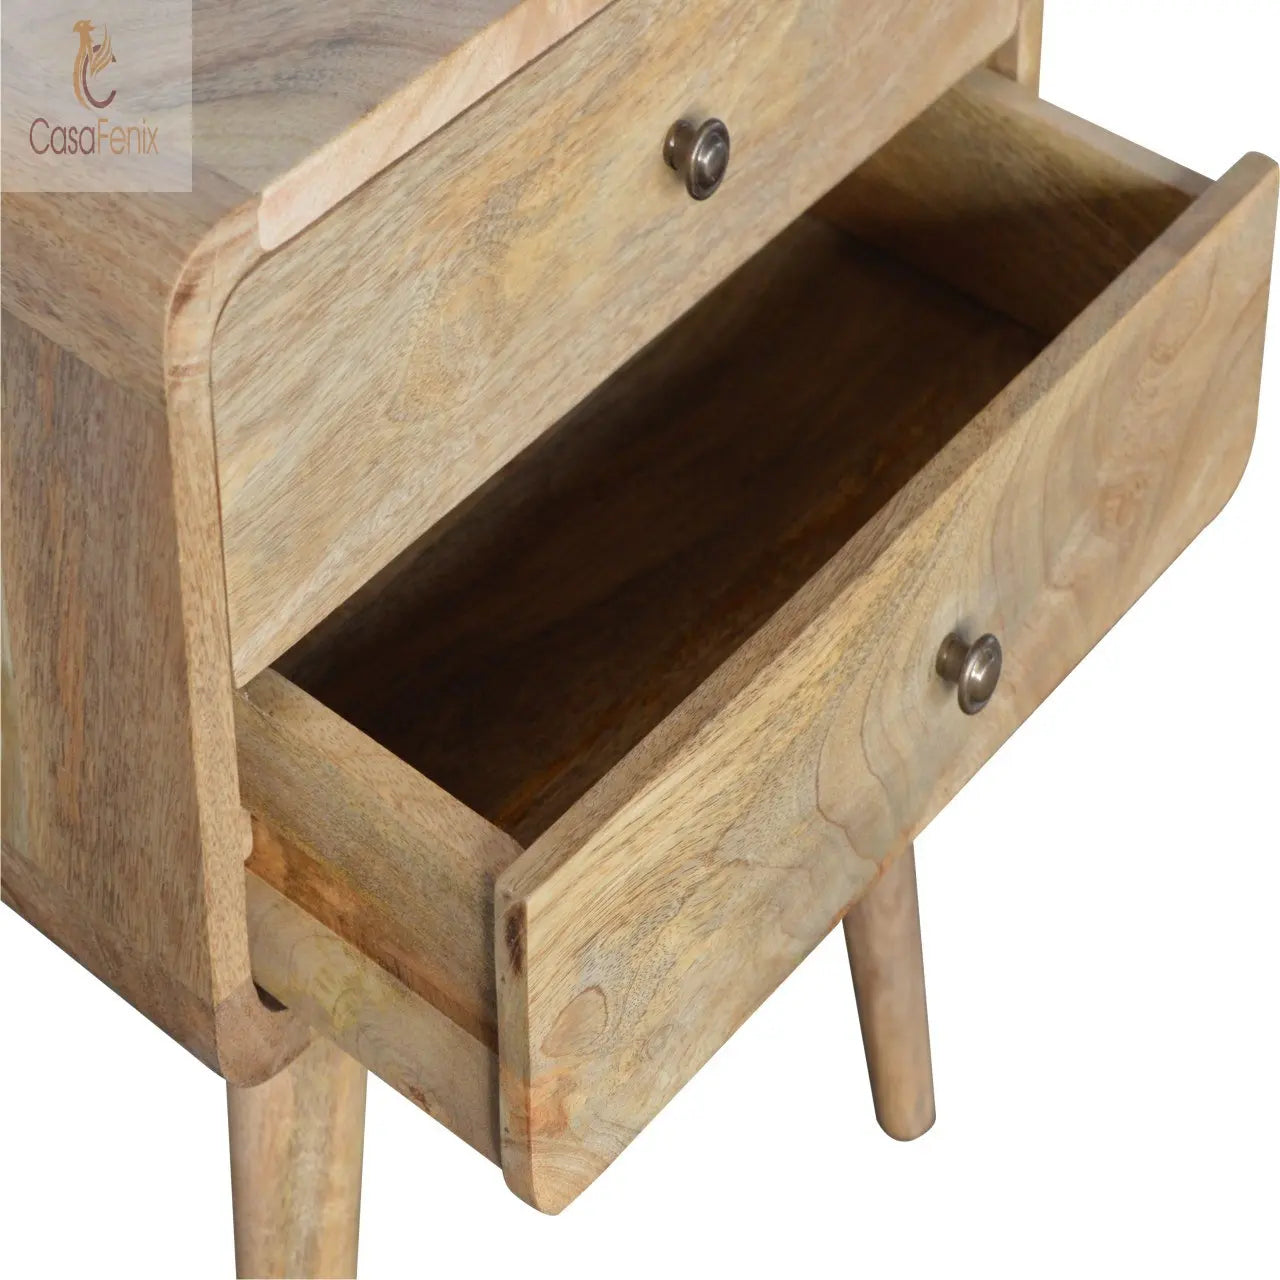 Curved Oak-ish Bedside Table 2 drawer Chest - CasaFenix